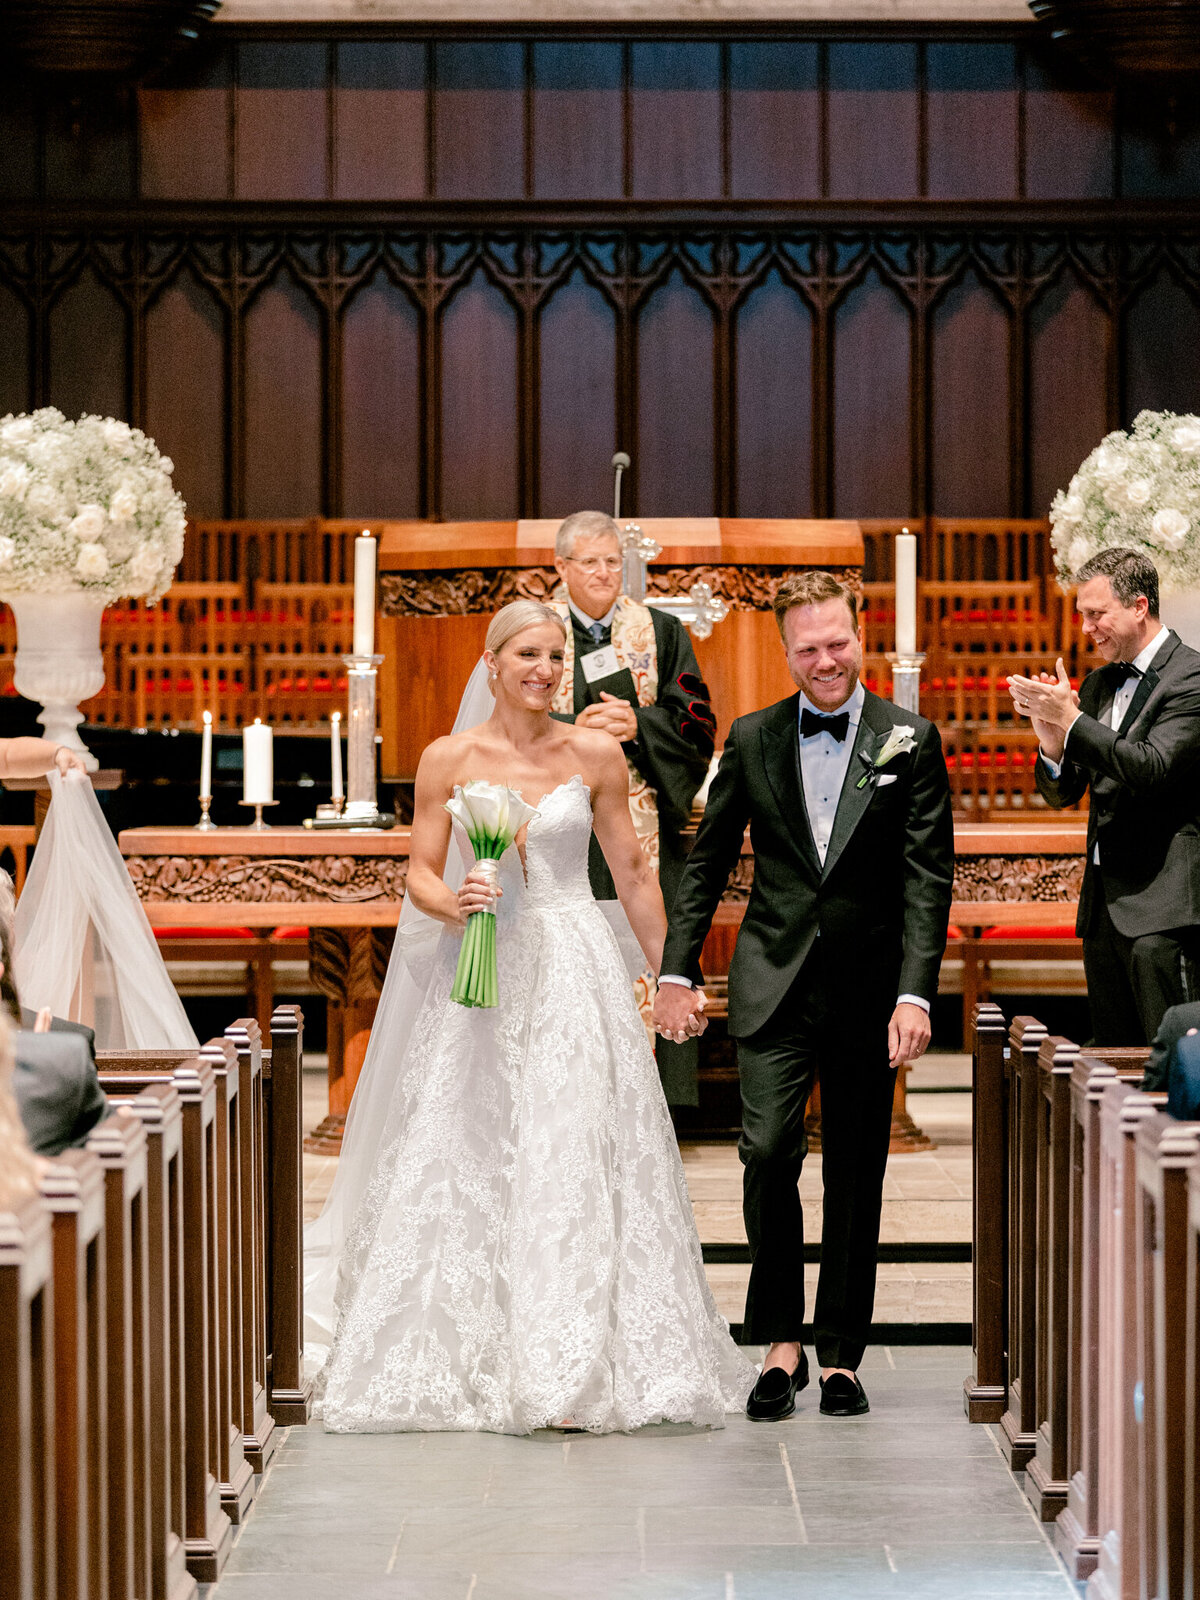 Katelyn & Kyle's Wedding at the Adolphus Hotel | Dallas Wedding Photographer | Sami Kathryn Photography-169